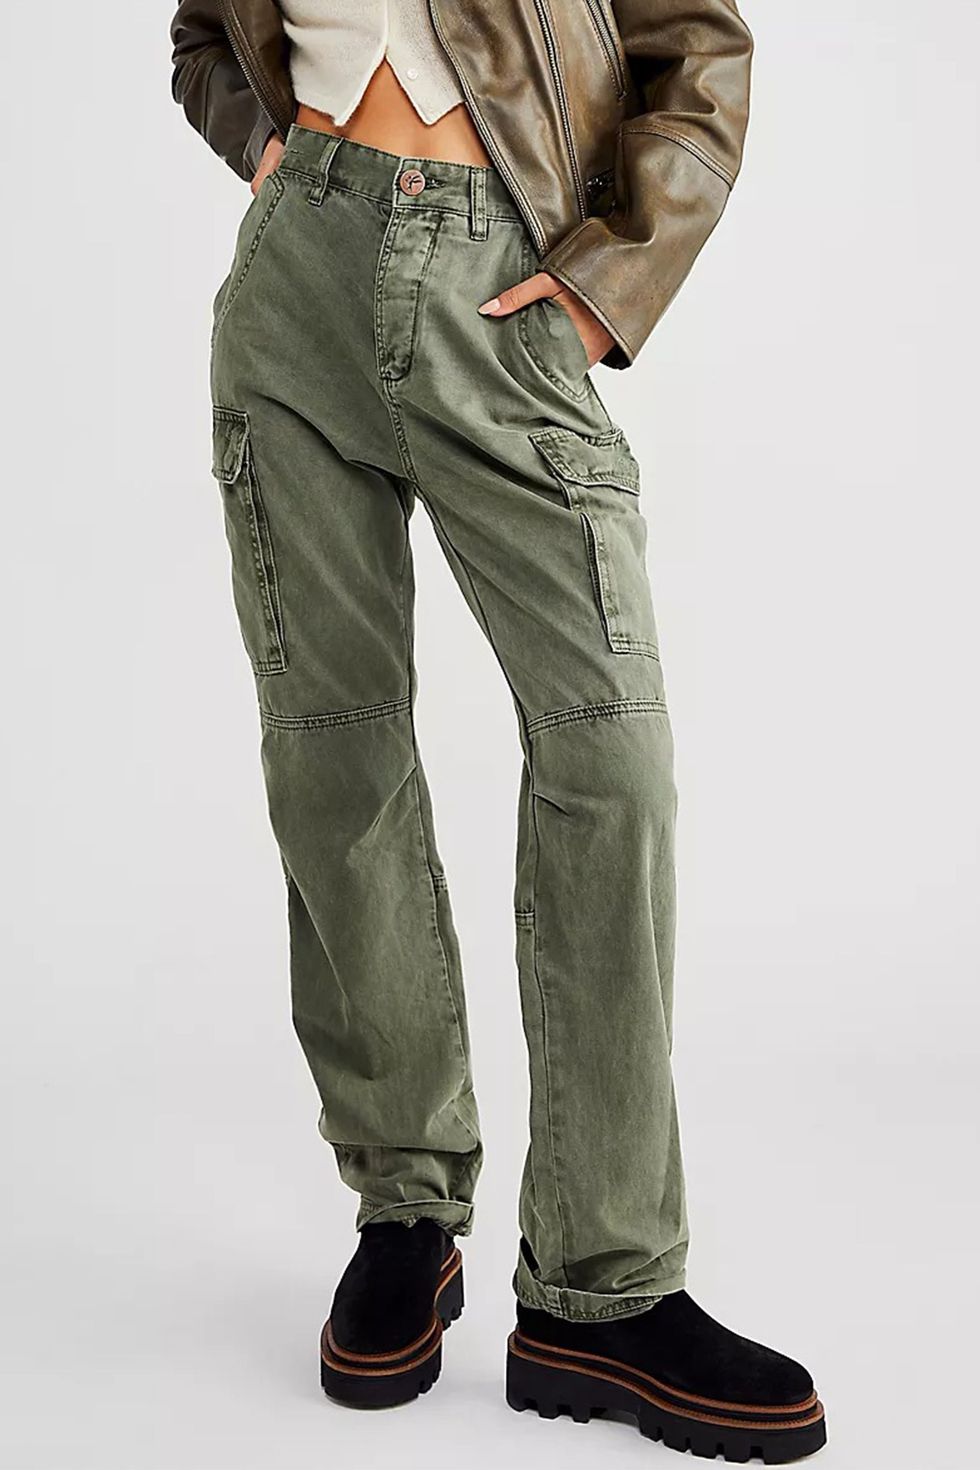 Green Cargo pants for Women